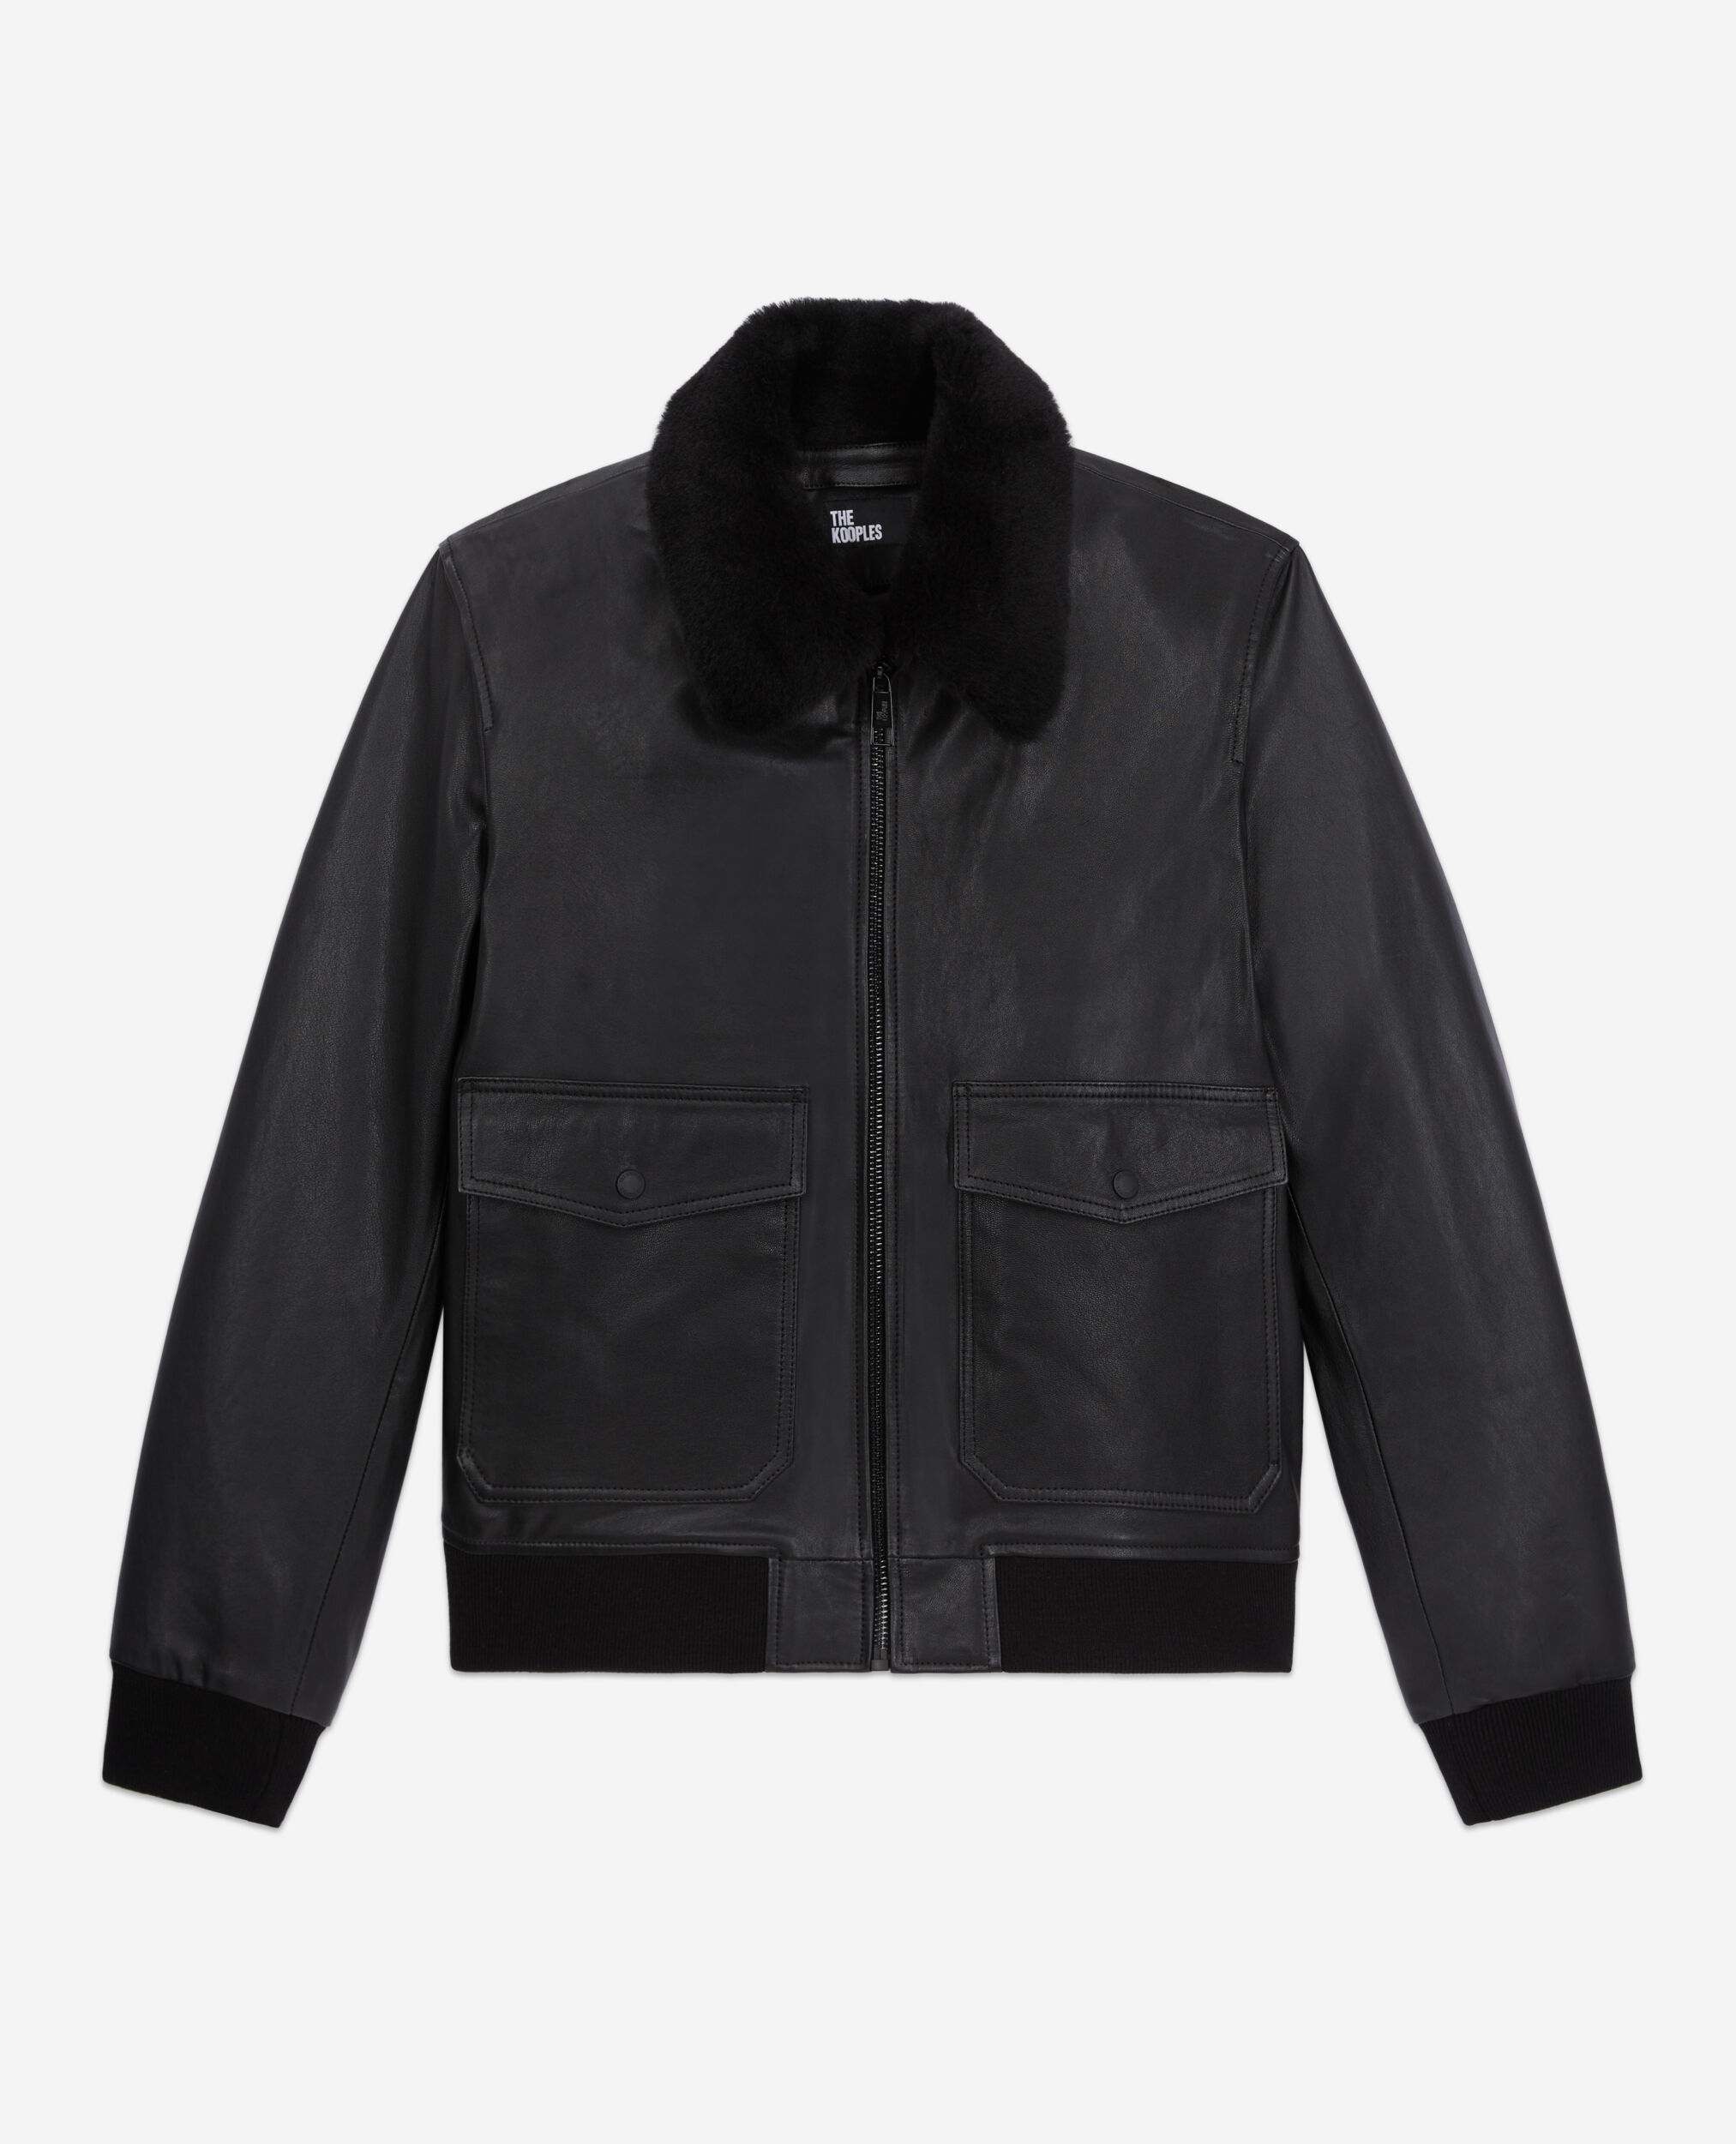 Black leather bomber jacket | The Kooples - Canada